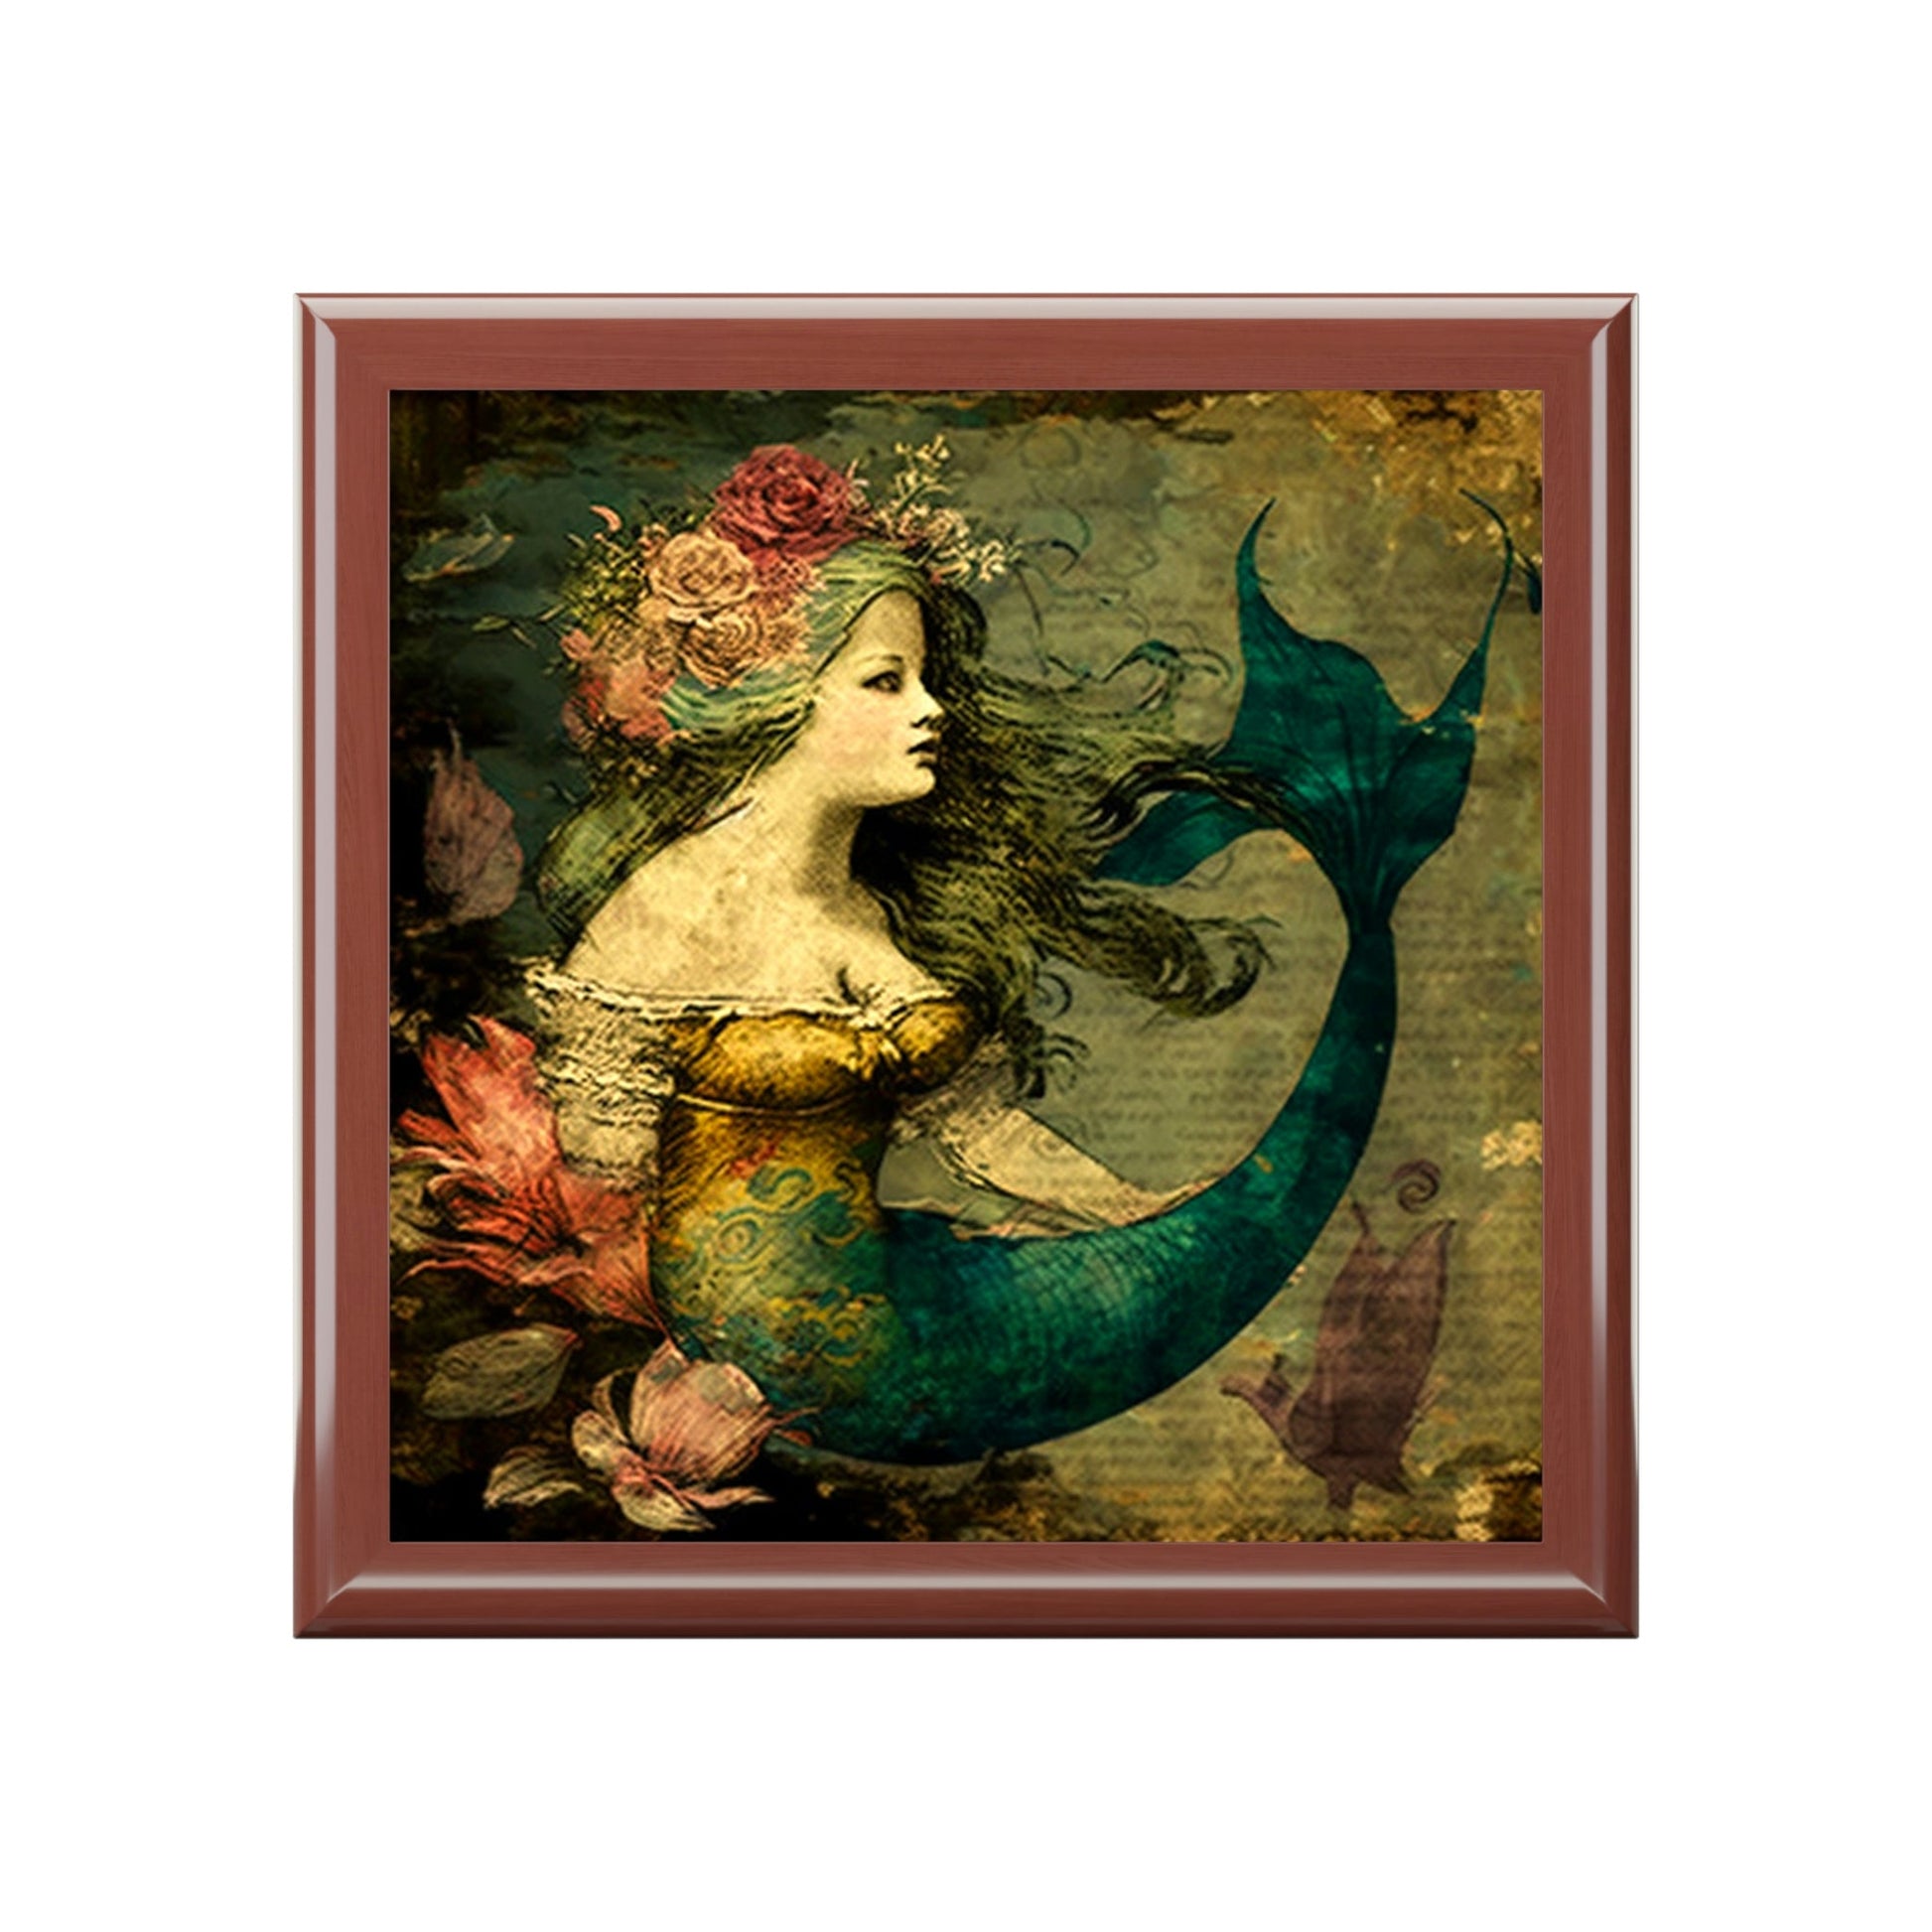 Vintage Mermaid Wood Keepsake Jewelry Box with Ceramic Tile Cover